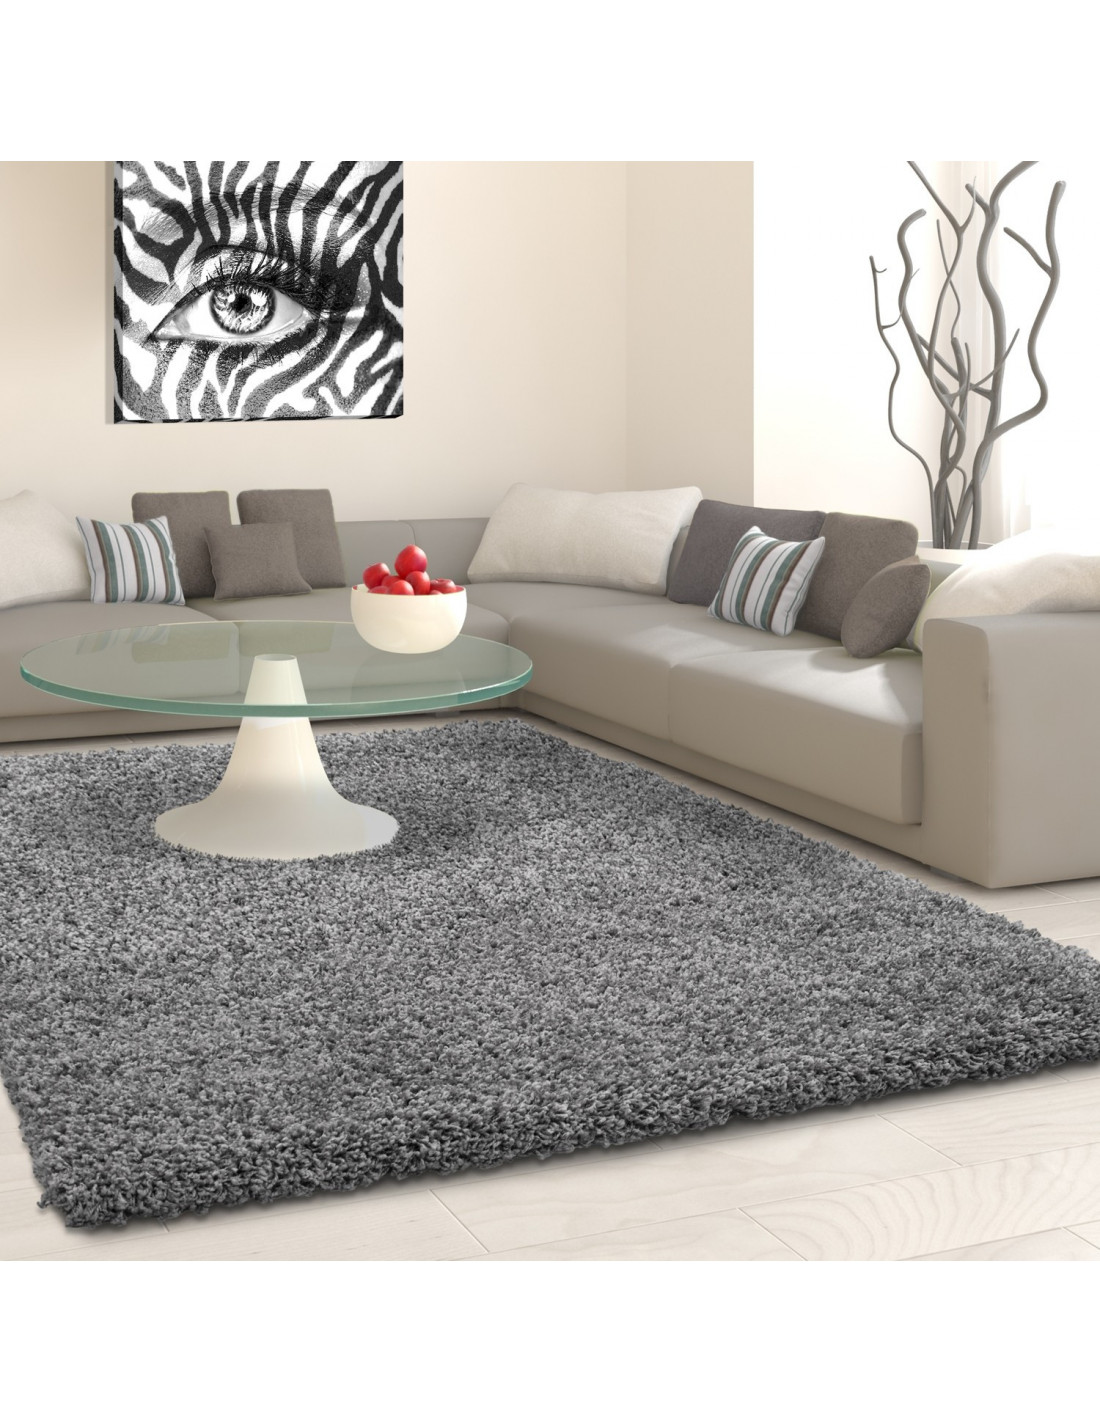 Shaggy carpet, pile height 3cm, plain gray